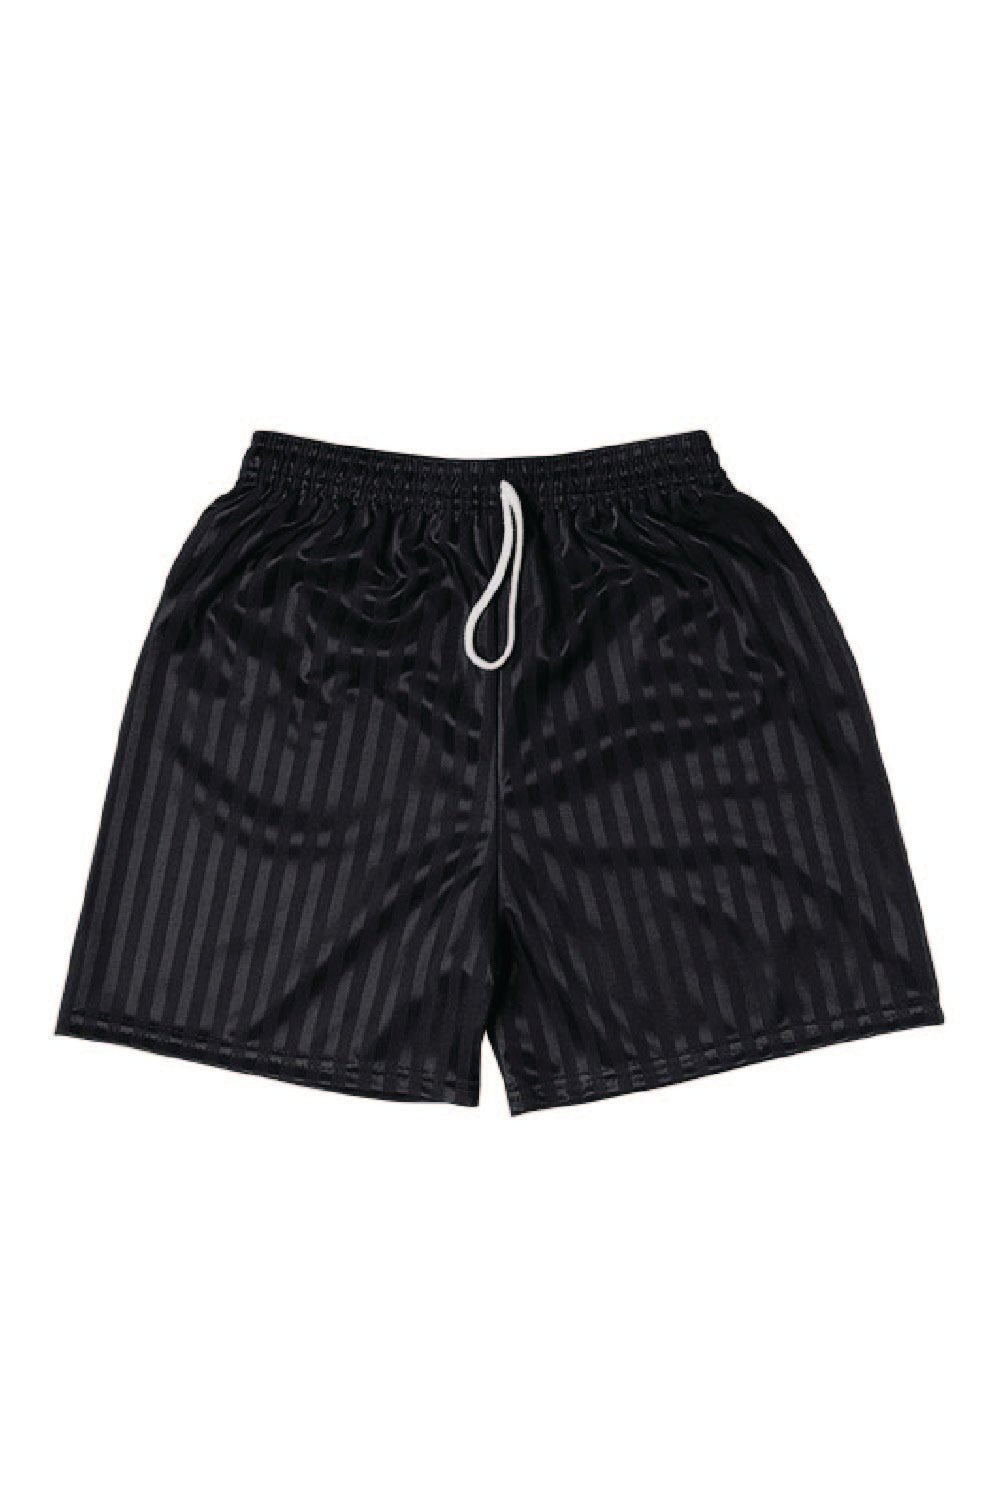 PE Shorts - Black - Uniformwise Schoolwear